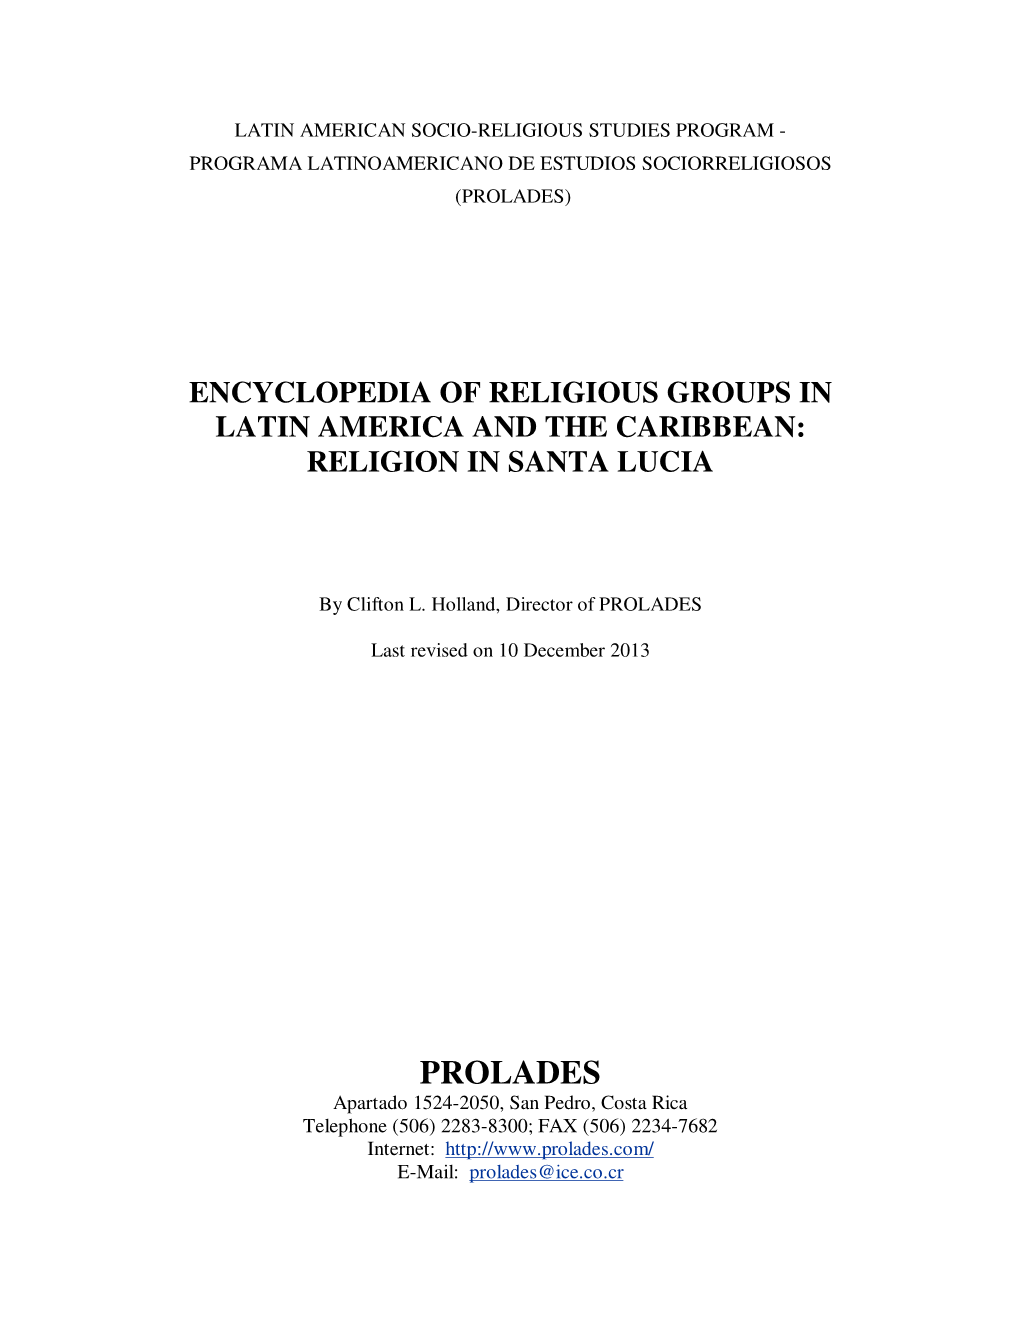 Religion-St-Lucia-2013-Eng.Pdf